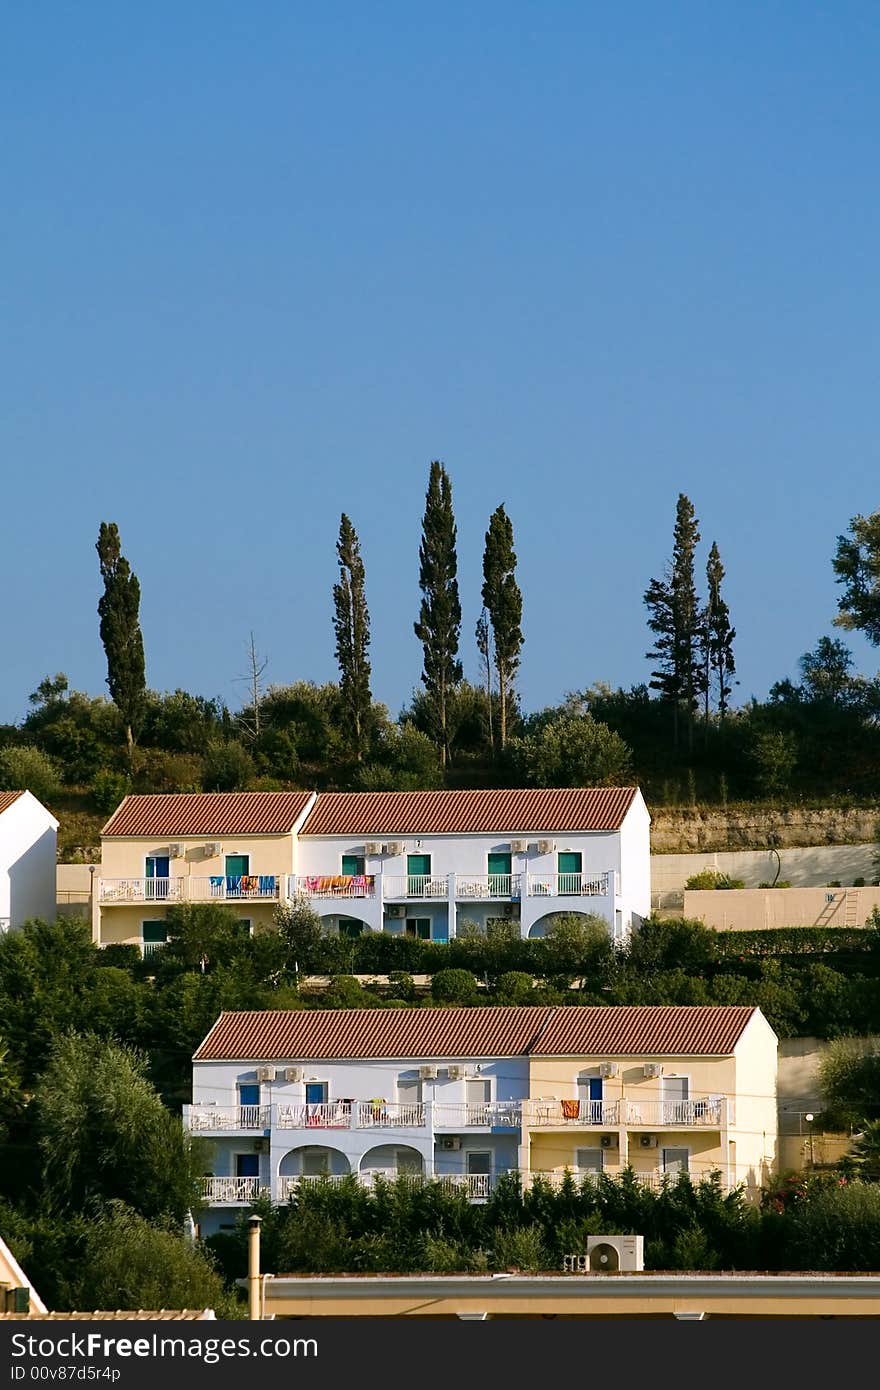 Small greek apartments near sea at Sidari - Corfu island. Small greek apartments near sea at Sidari - Corfu island